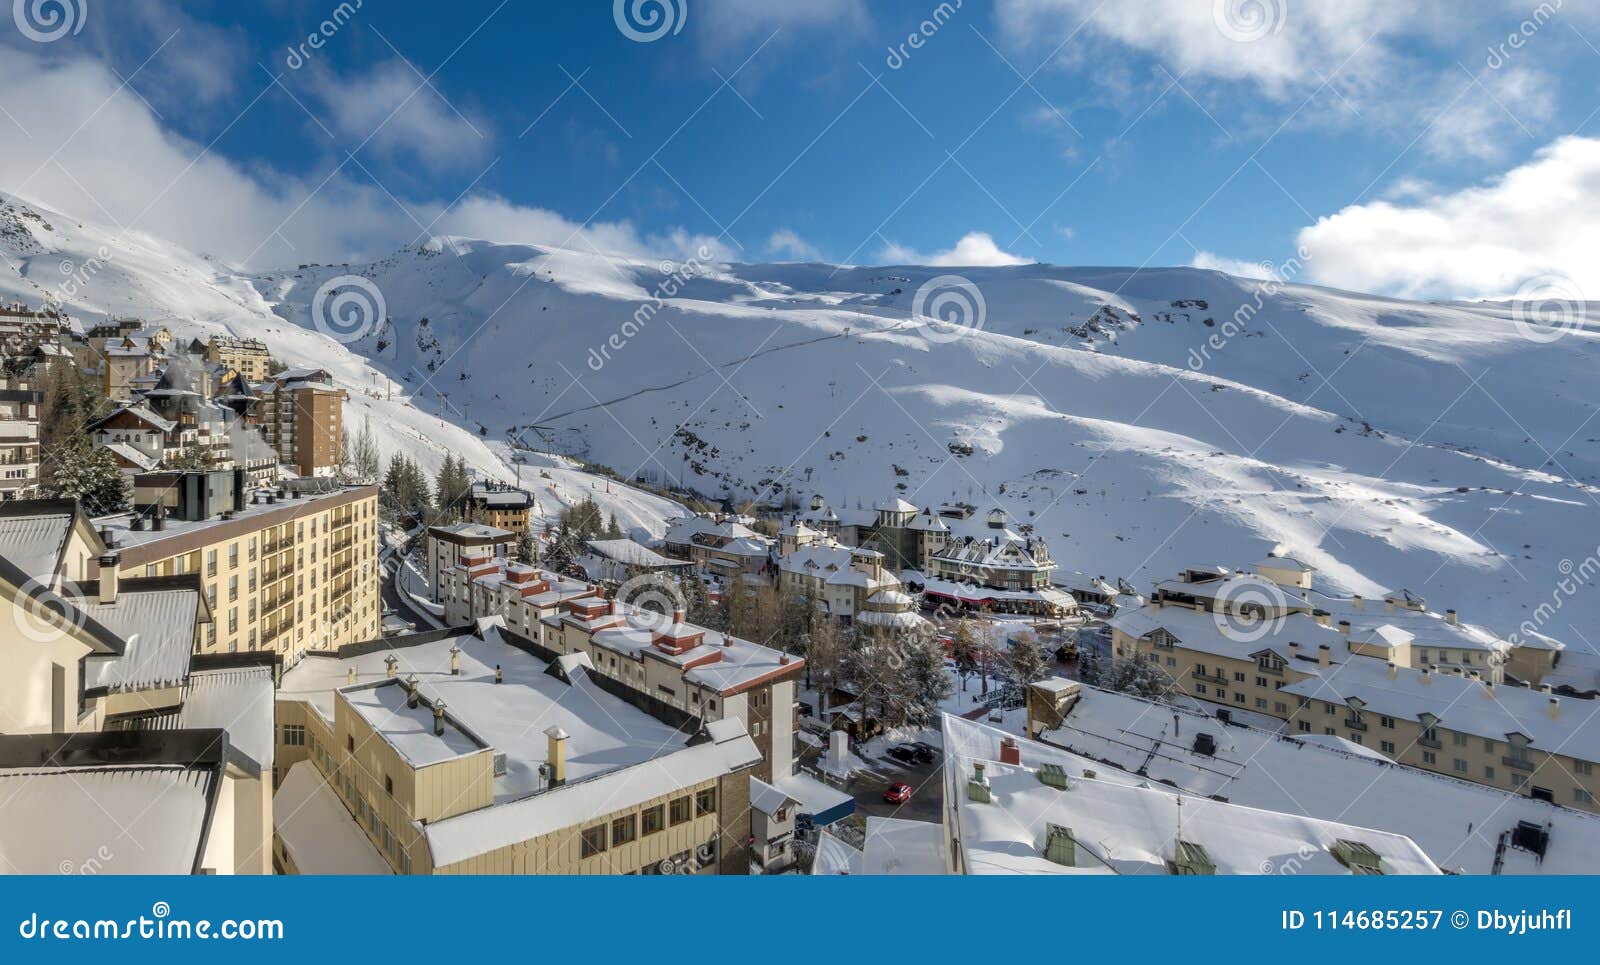 ski resort in sierra nevada mountains in spain